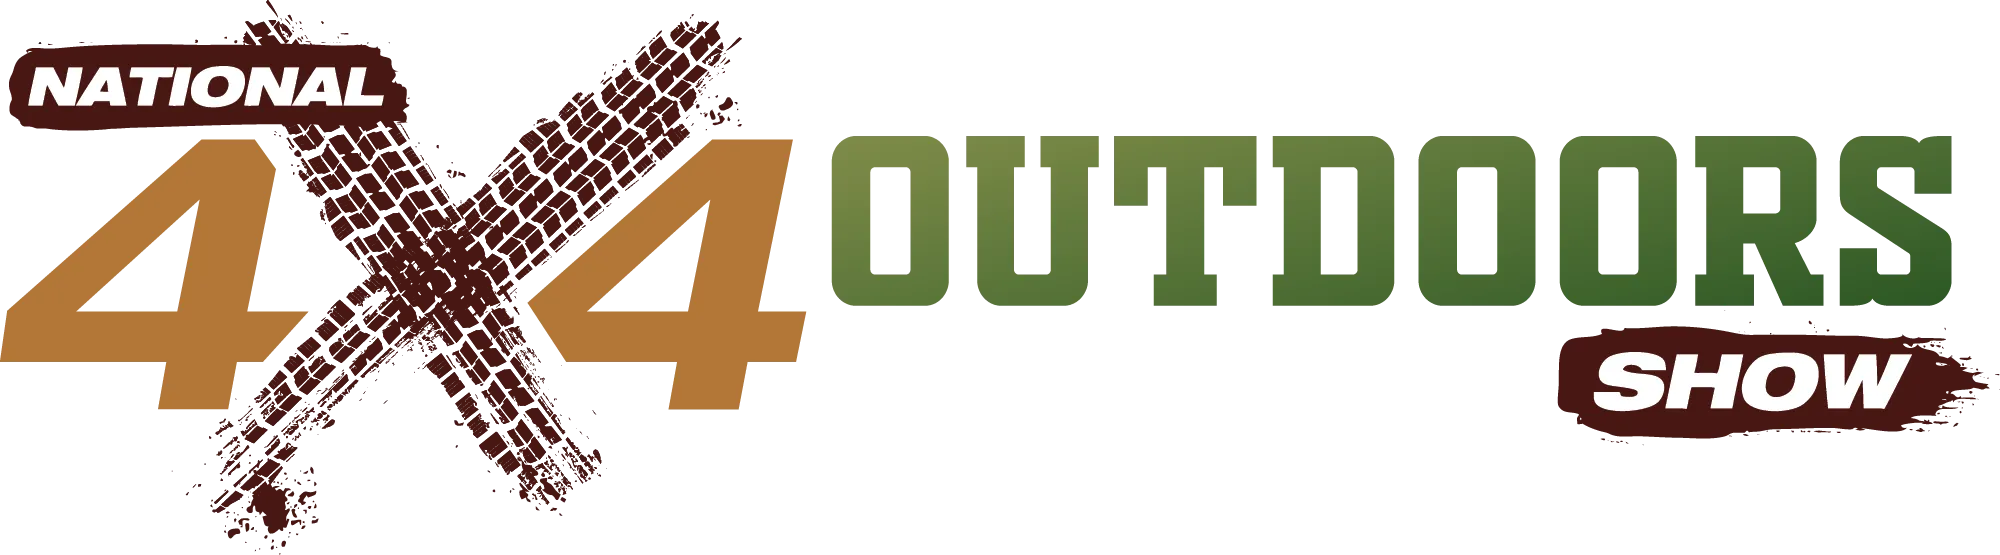 National 4x4 Outdoors Show Logo